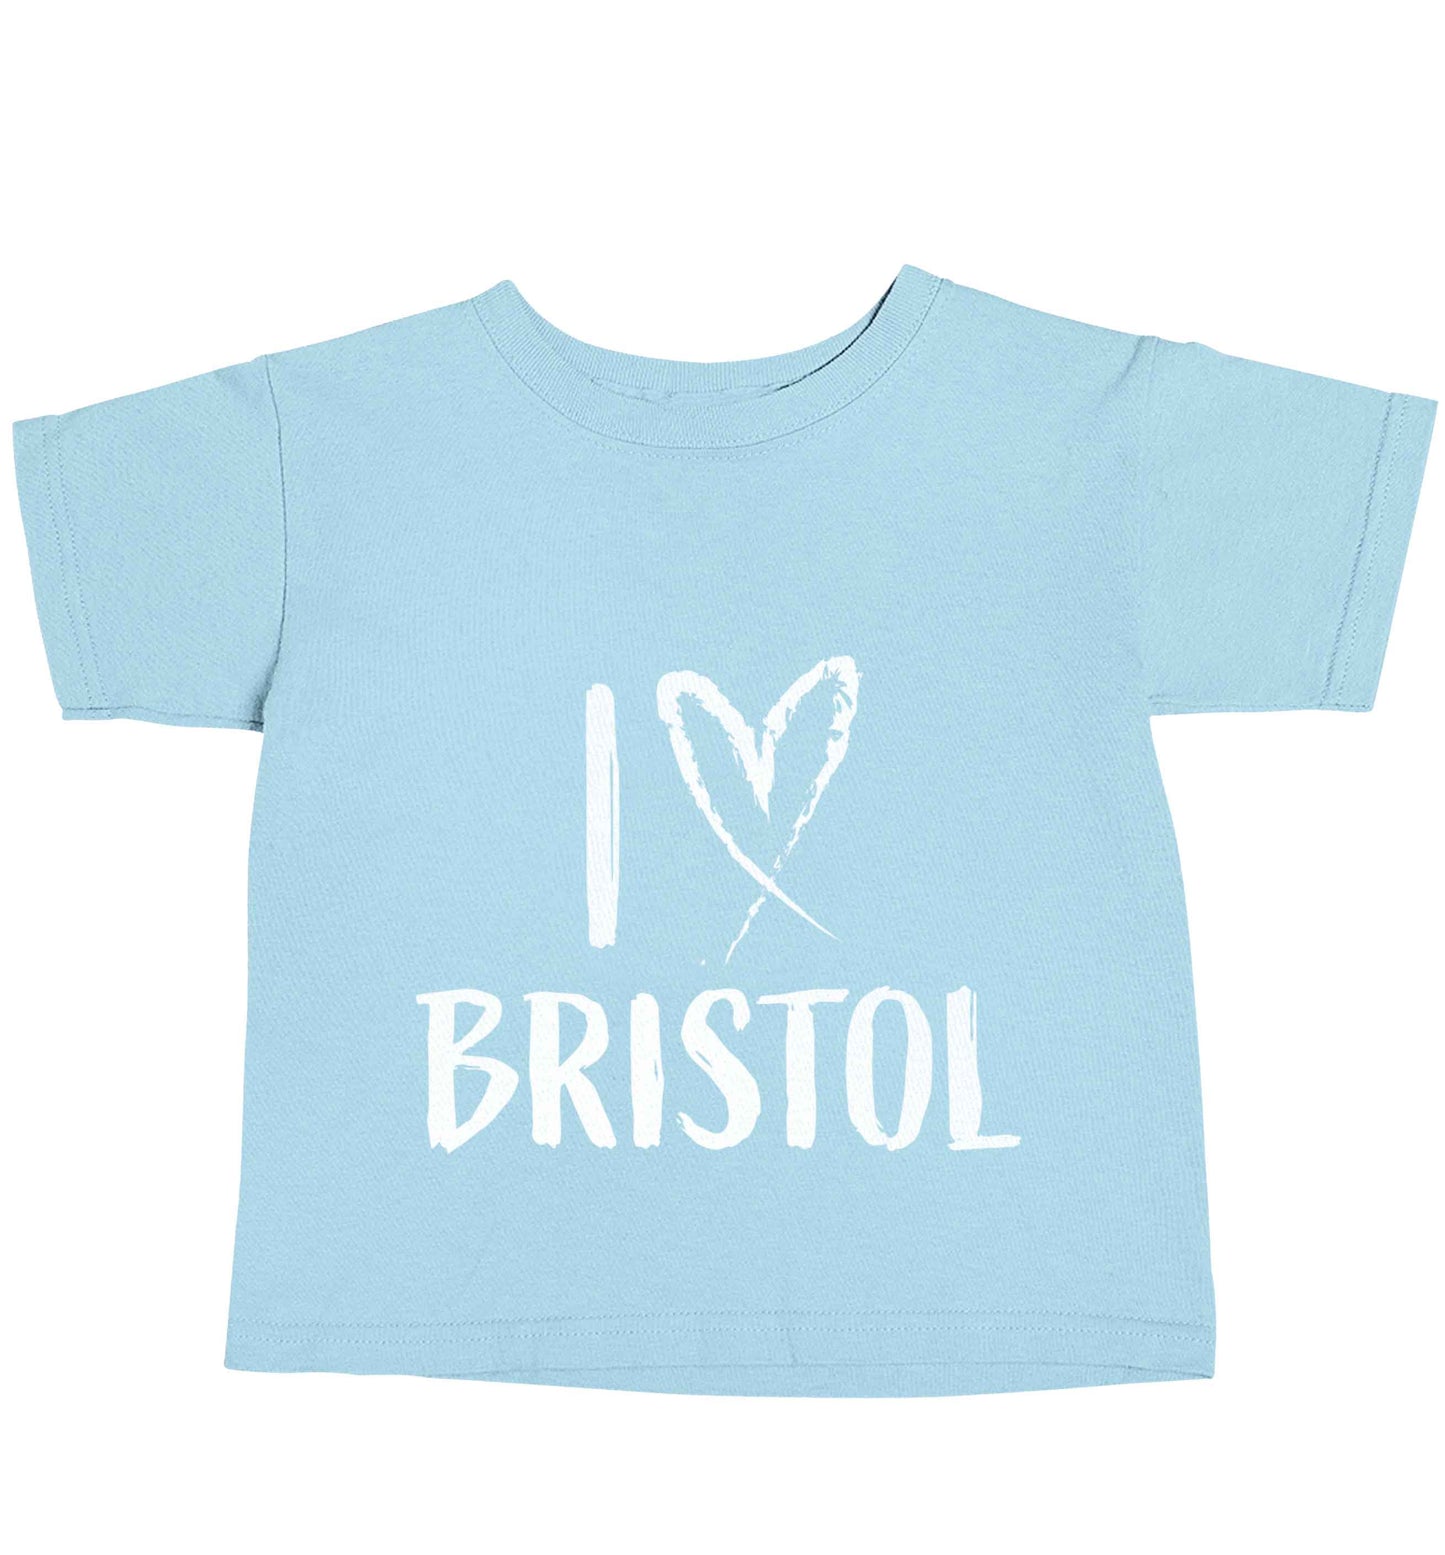 I love Bristol light blue baby toddler Tshirt 2 Years